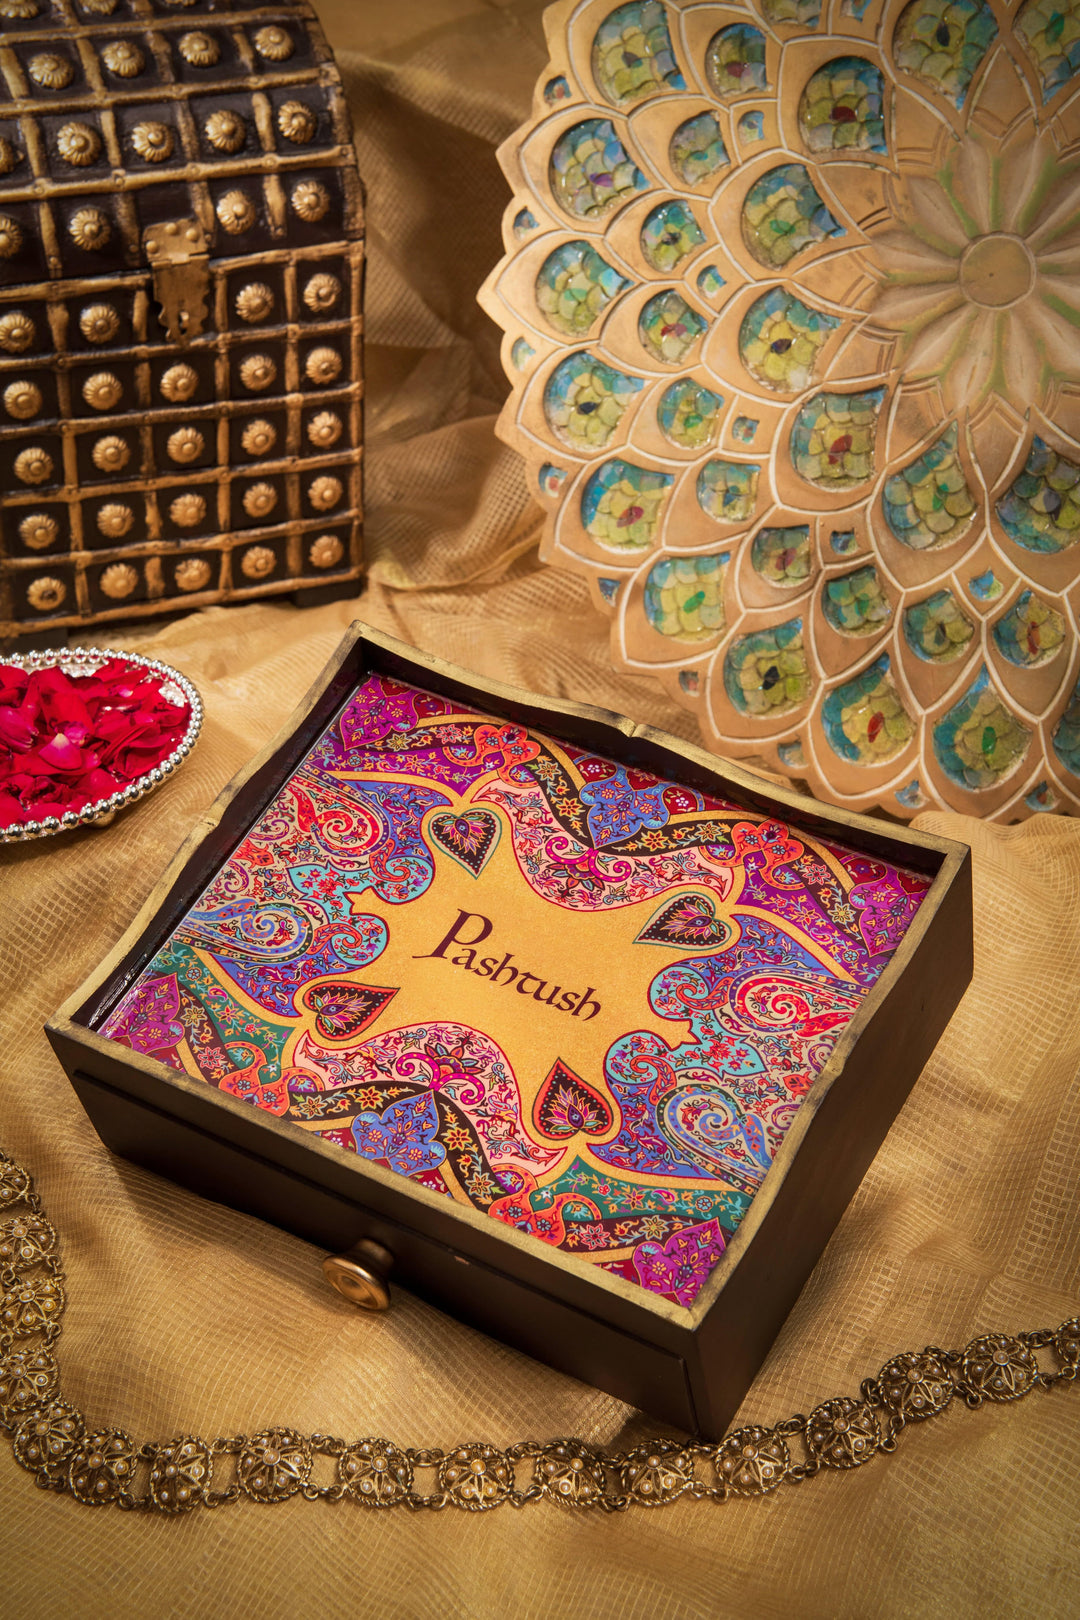 Pashtush India Box Pashtush Keepsake Wooden Chester Box, With Pullout Shawl Drawer (Box Only)